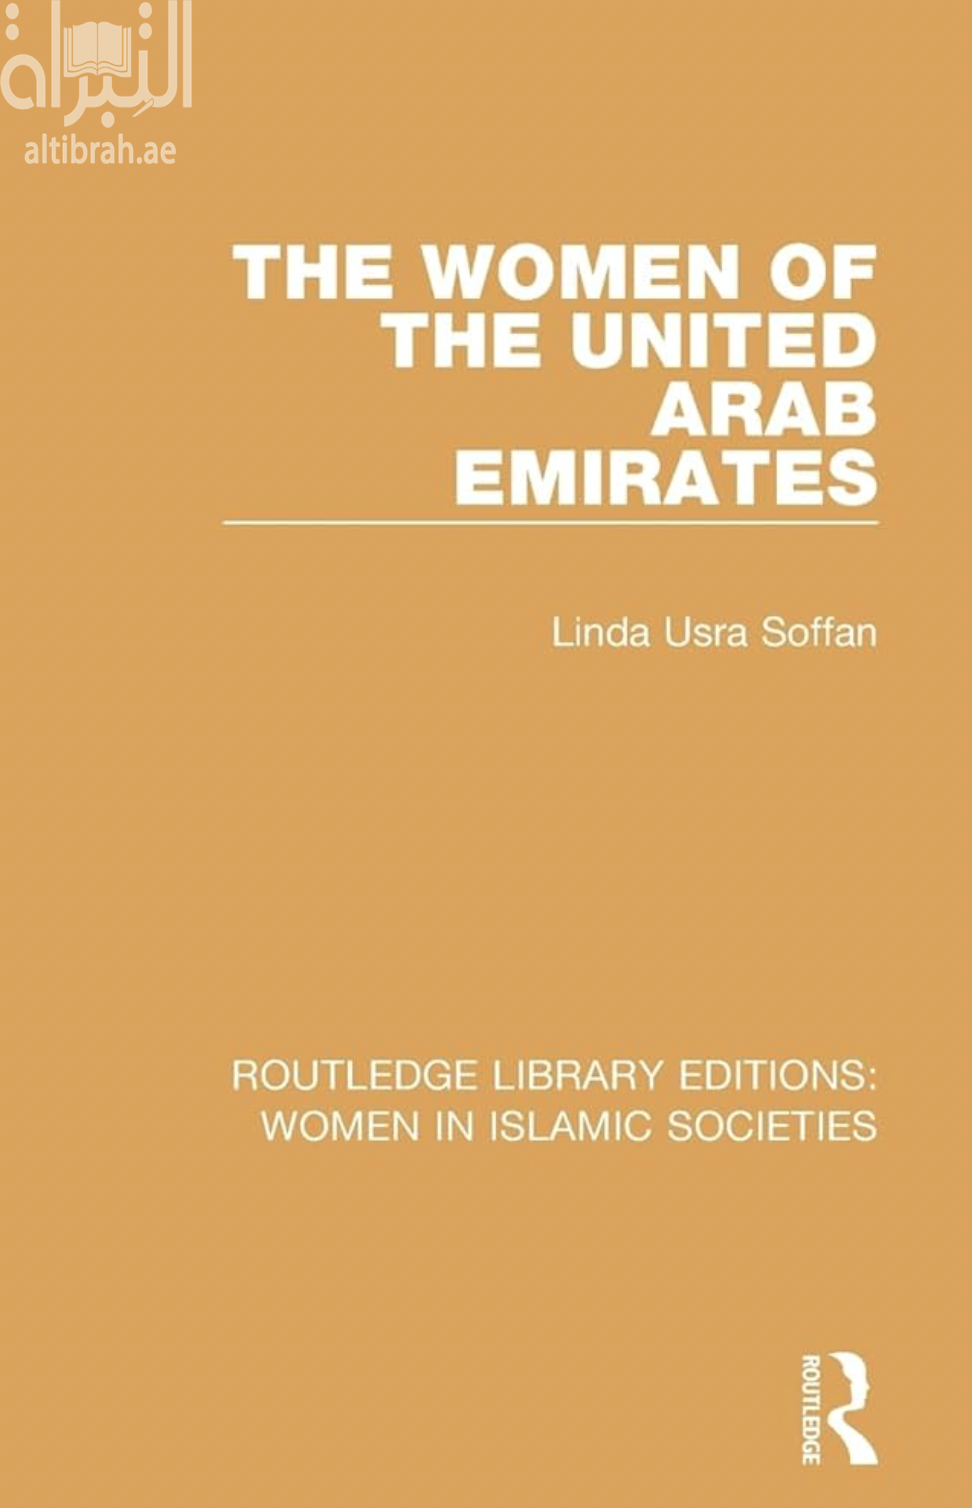 The Women of the United Arab Emirates